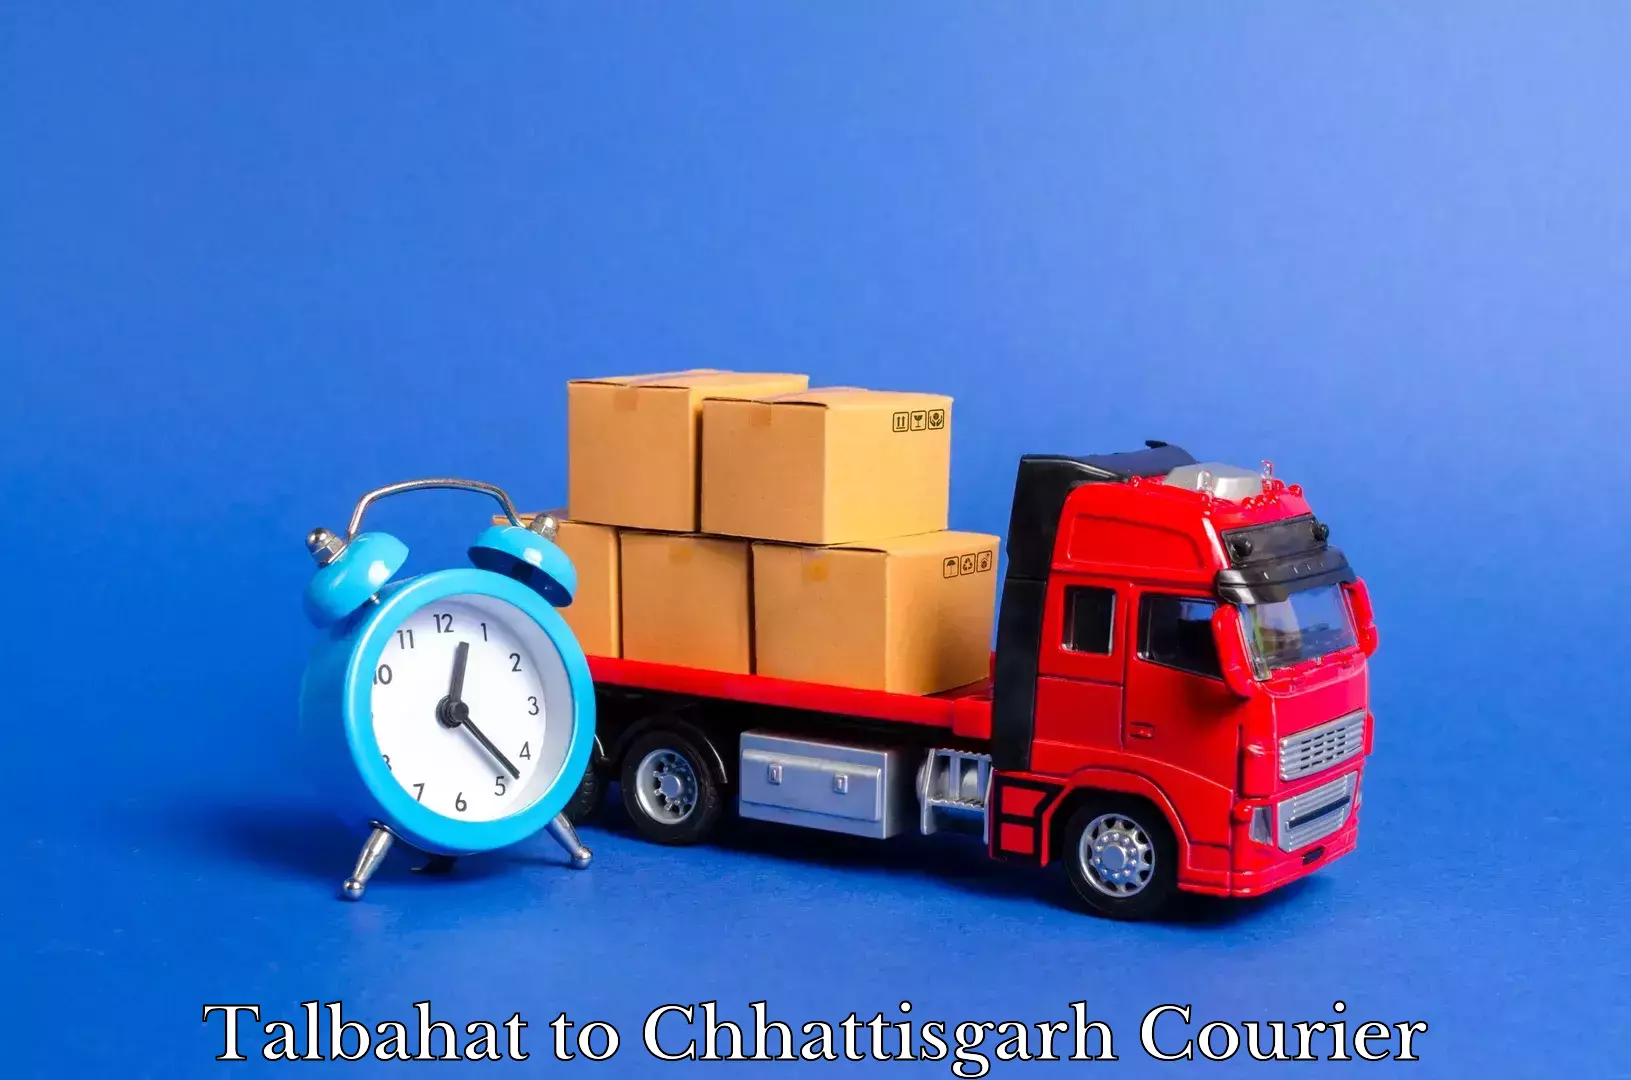 Trusted moving company Talbahat to Chhattisgarh